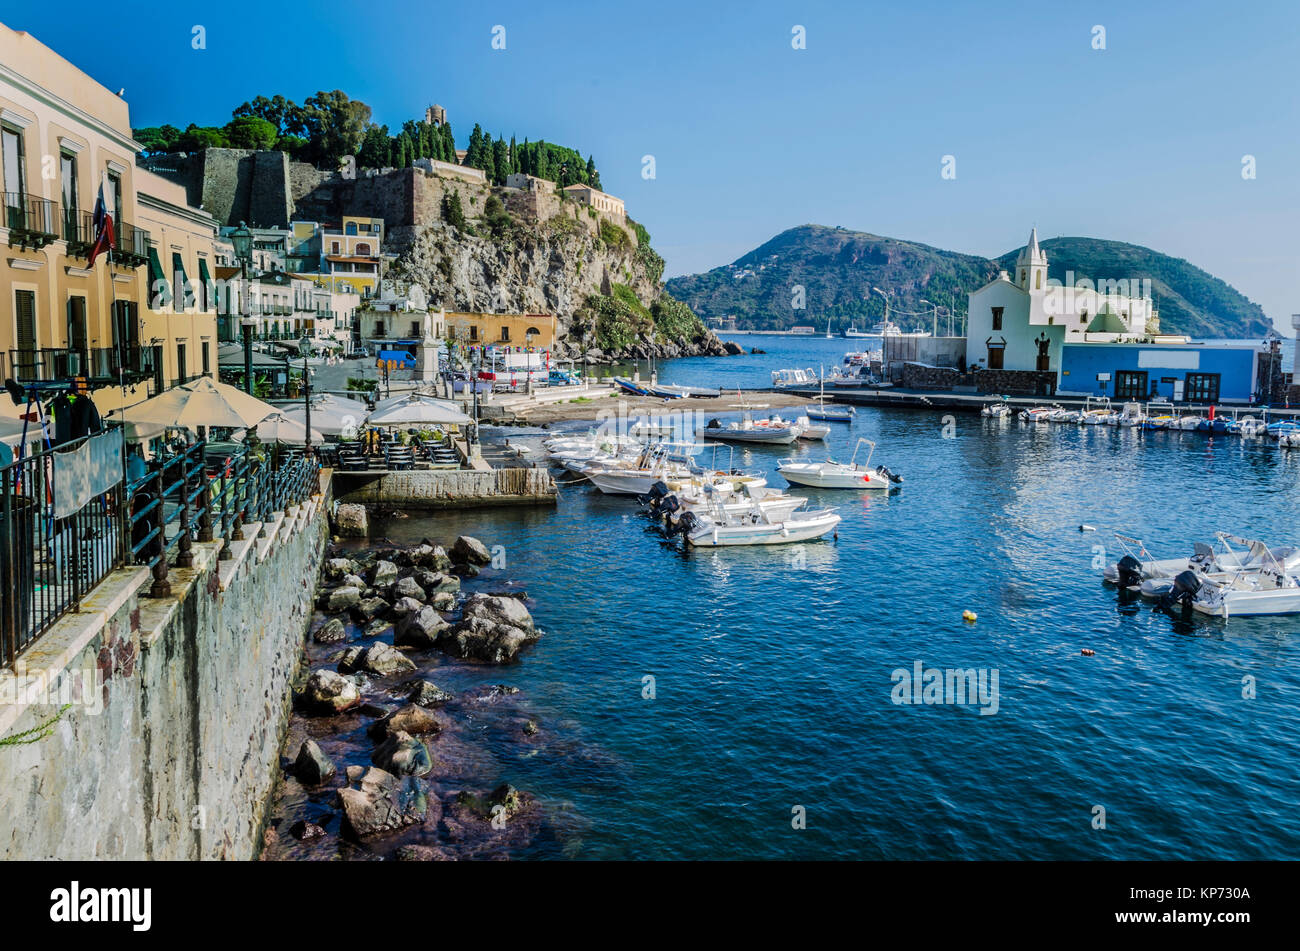 Marina buildings moor of boats and ancient fortress on island of lipari italy Stock Photo